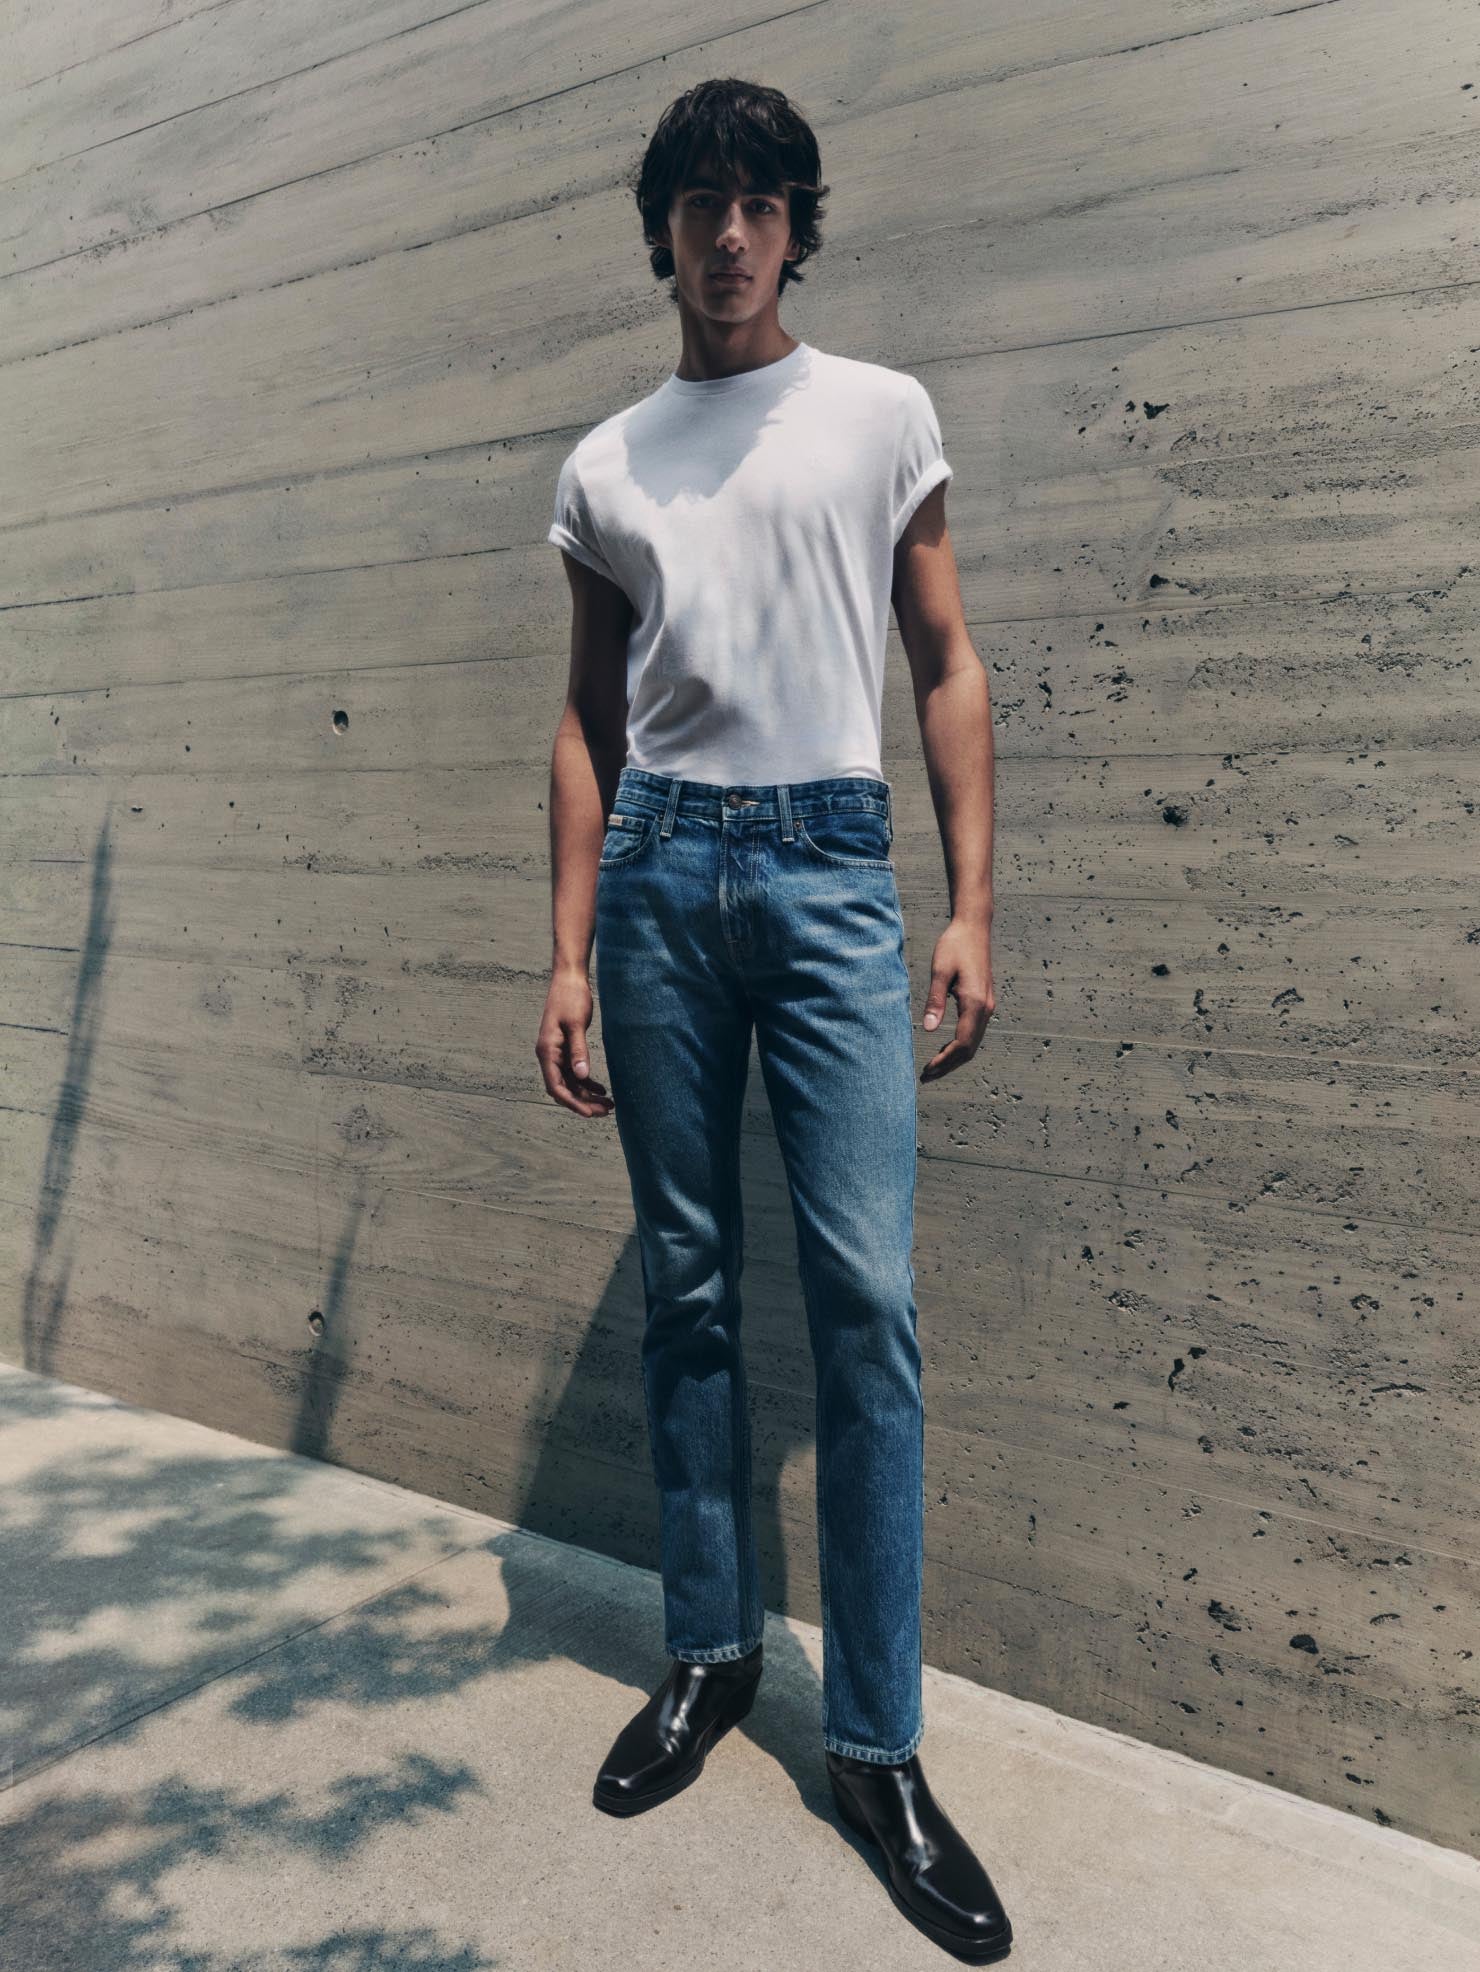 Calvin Klein Slim Fit Stretch Jeans, Mens, 40 32, Forever Black